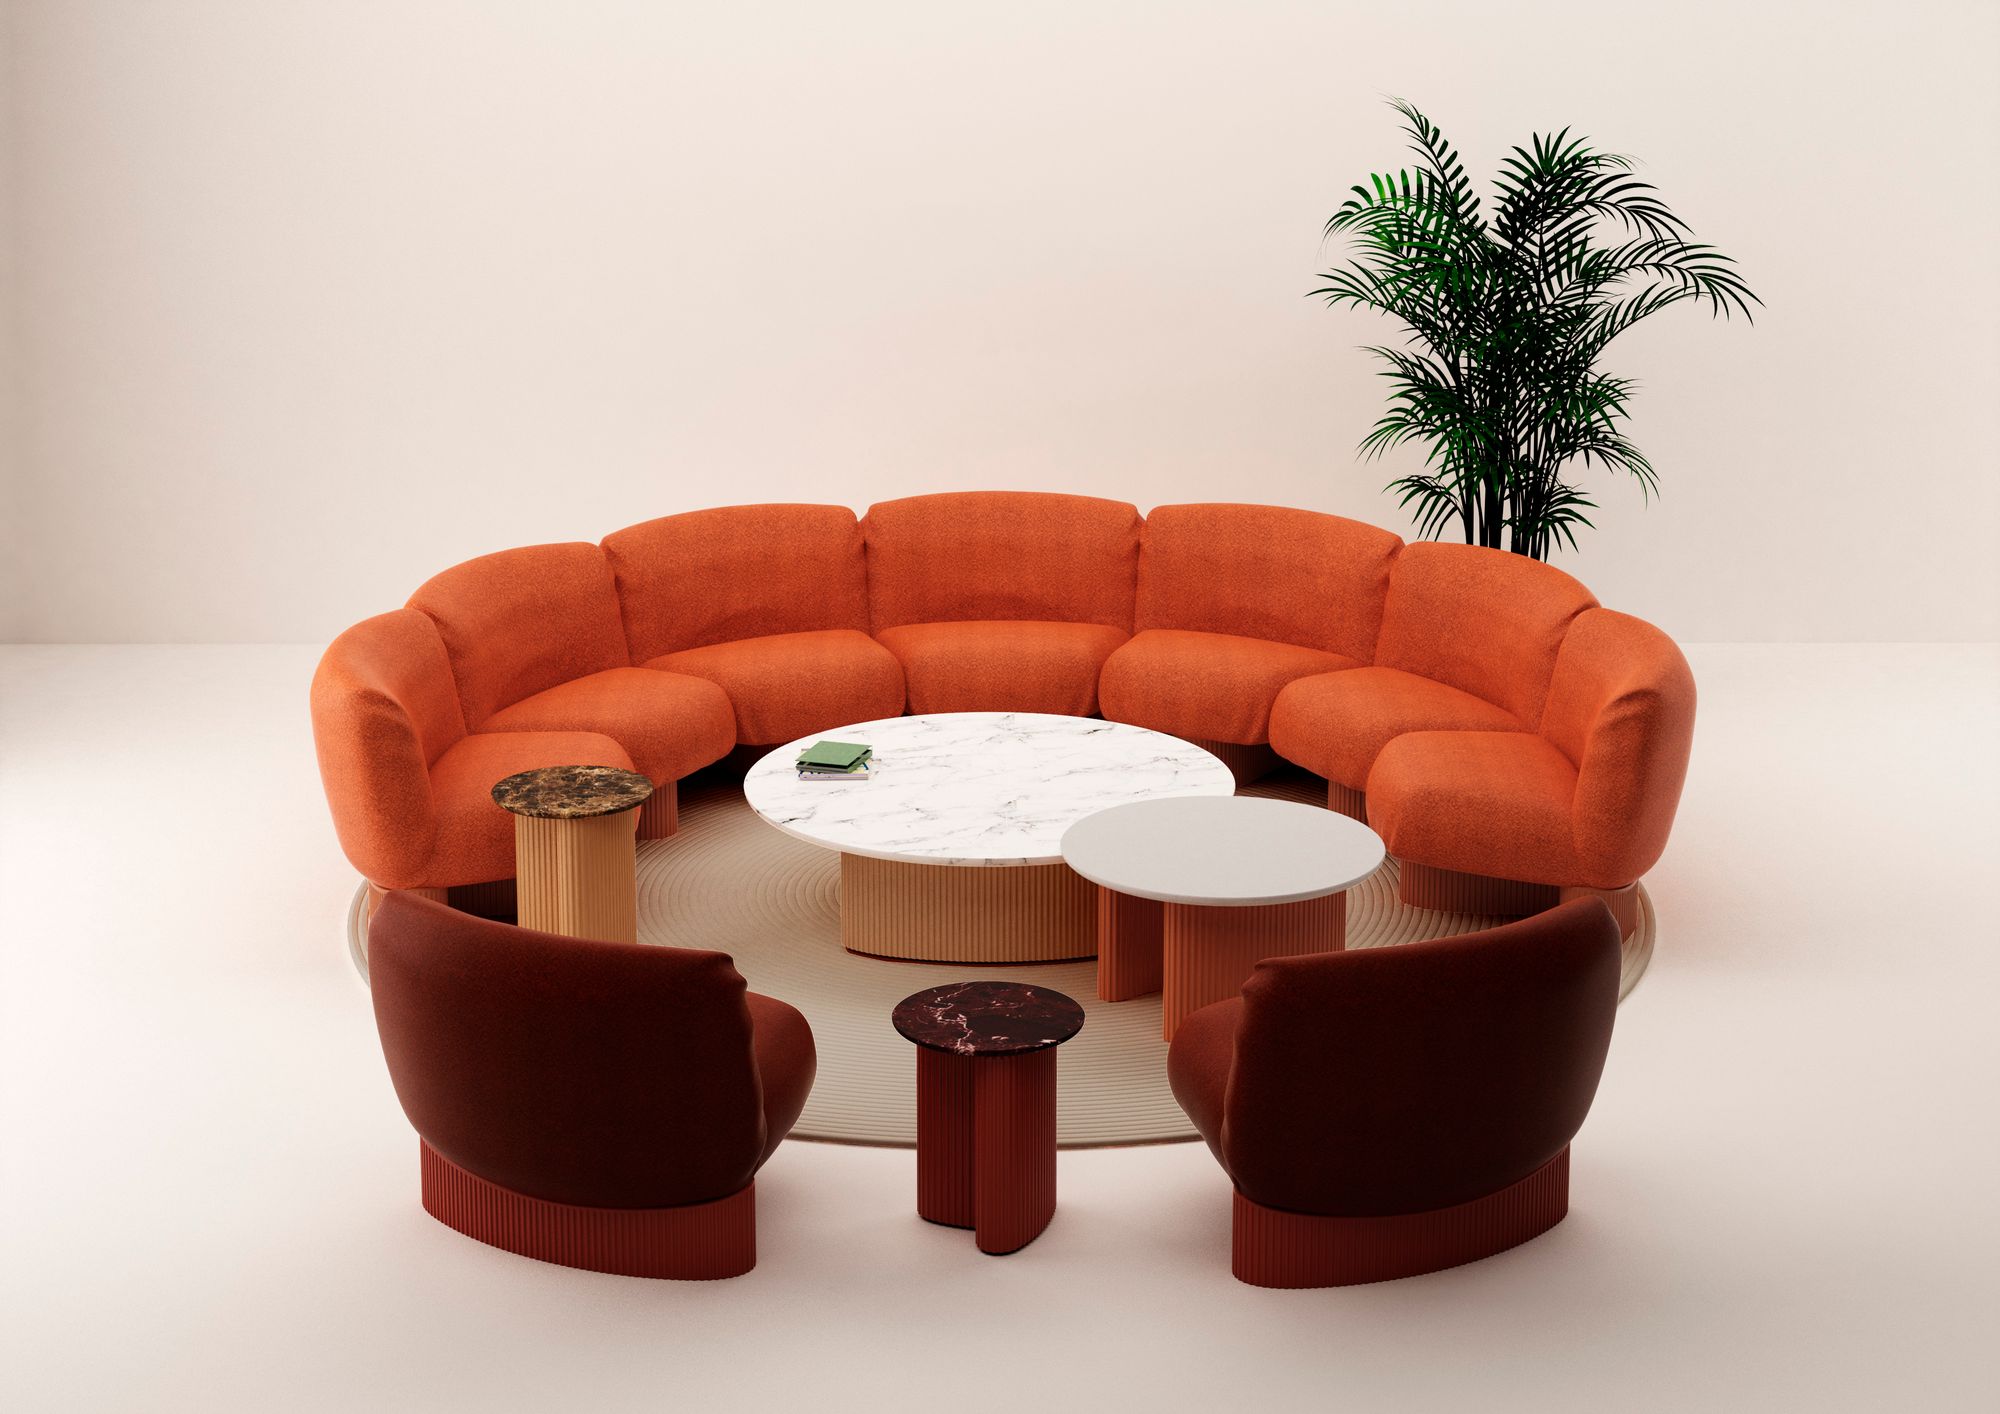 semi-circular orange sofa and brown chairs